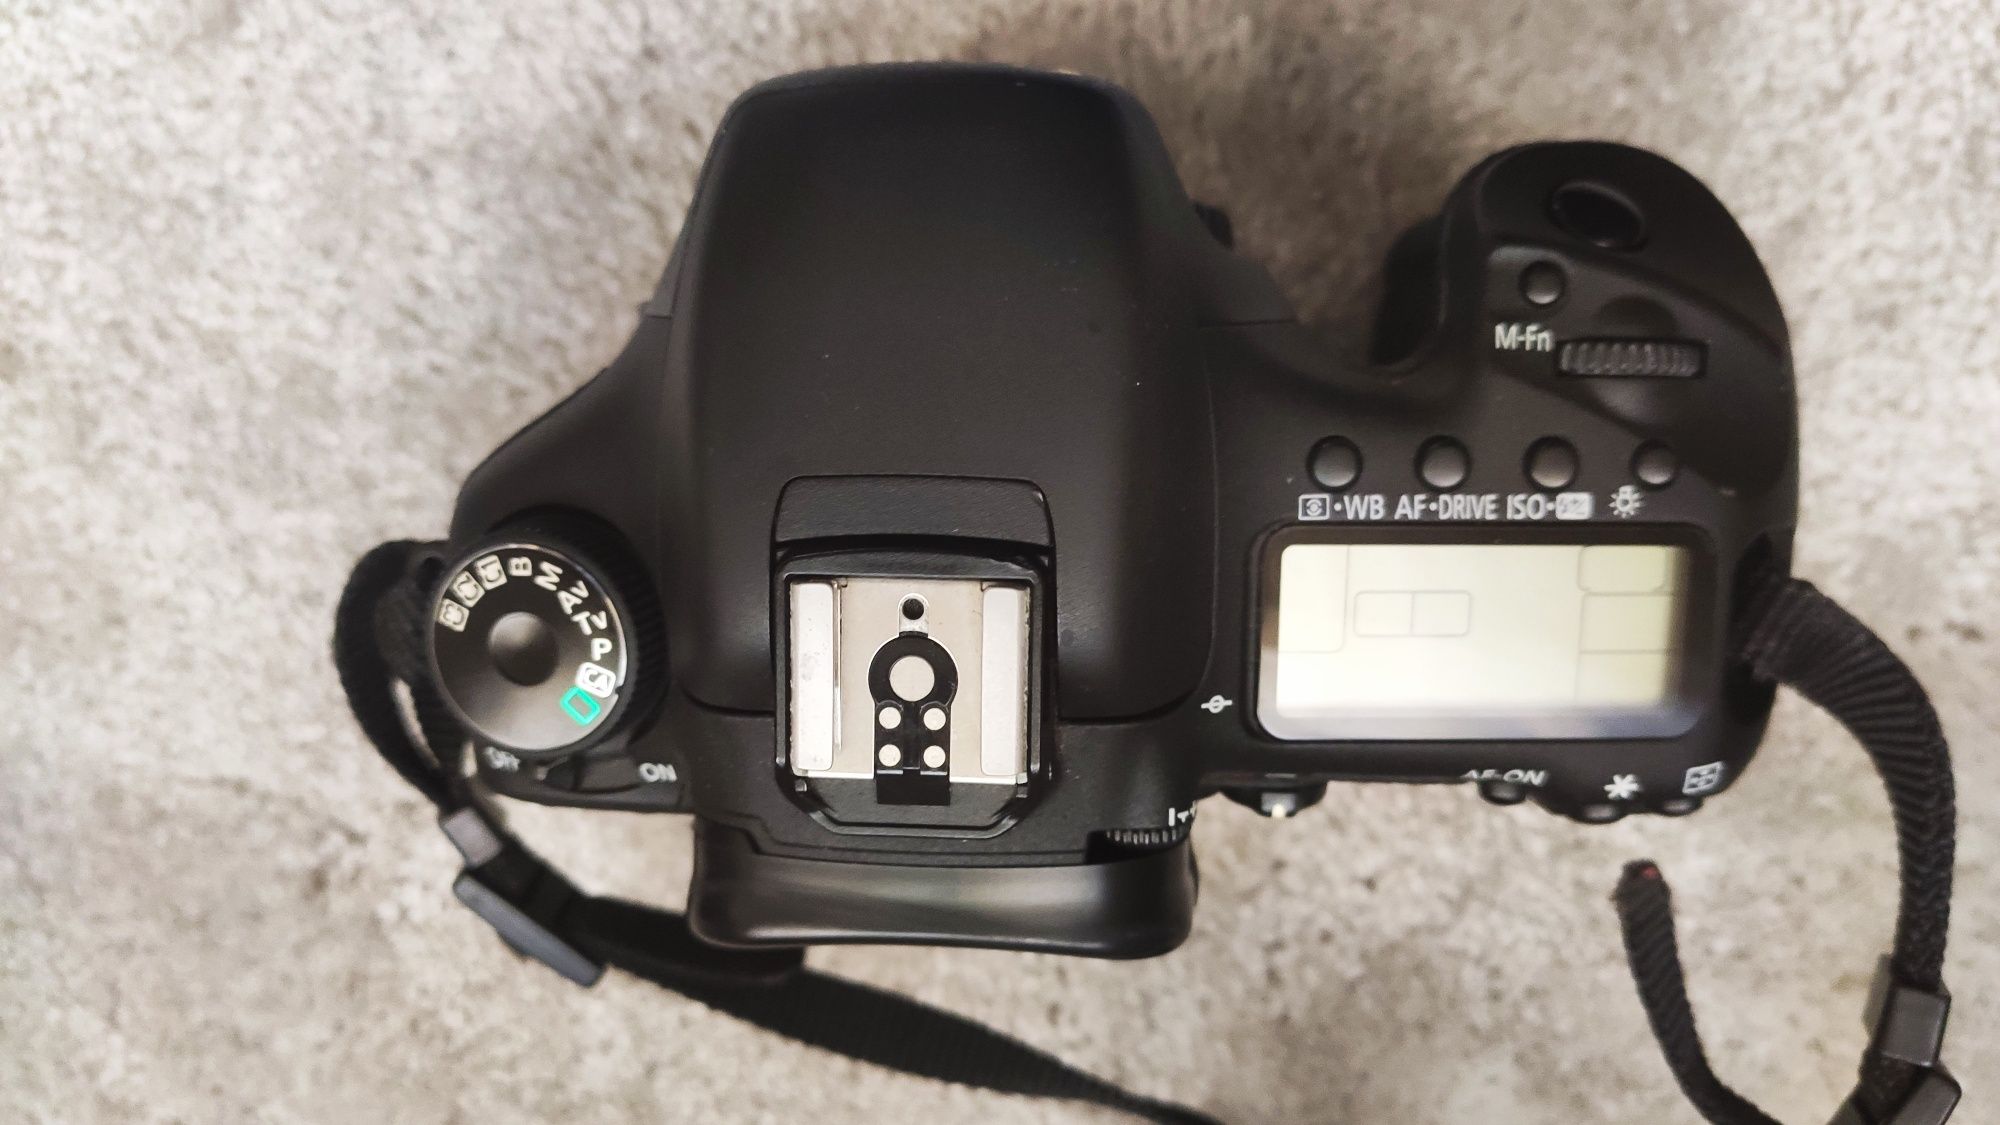 Kit Canon EOS 7D + lente + acessórios